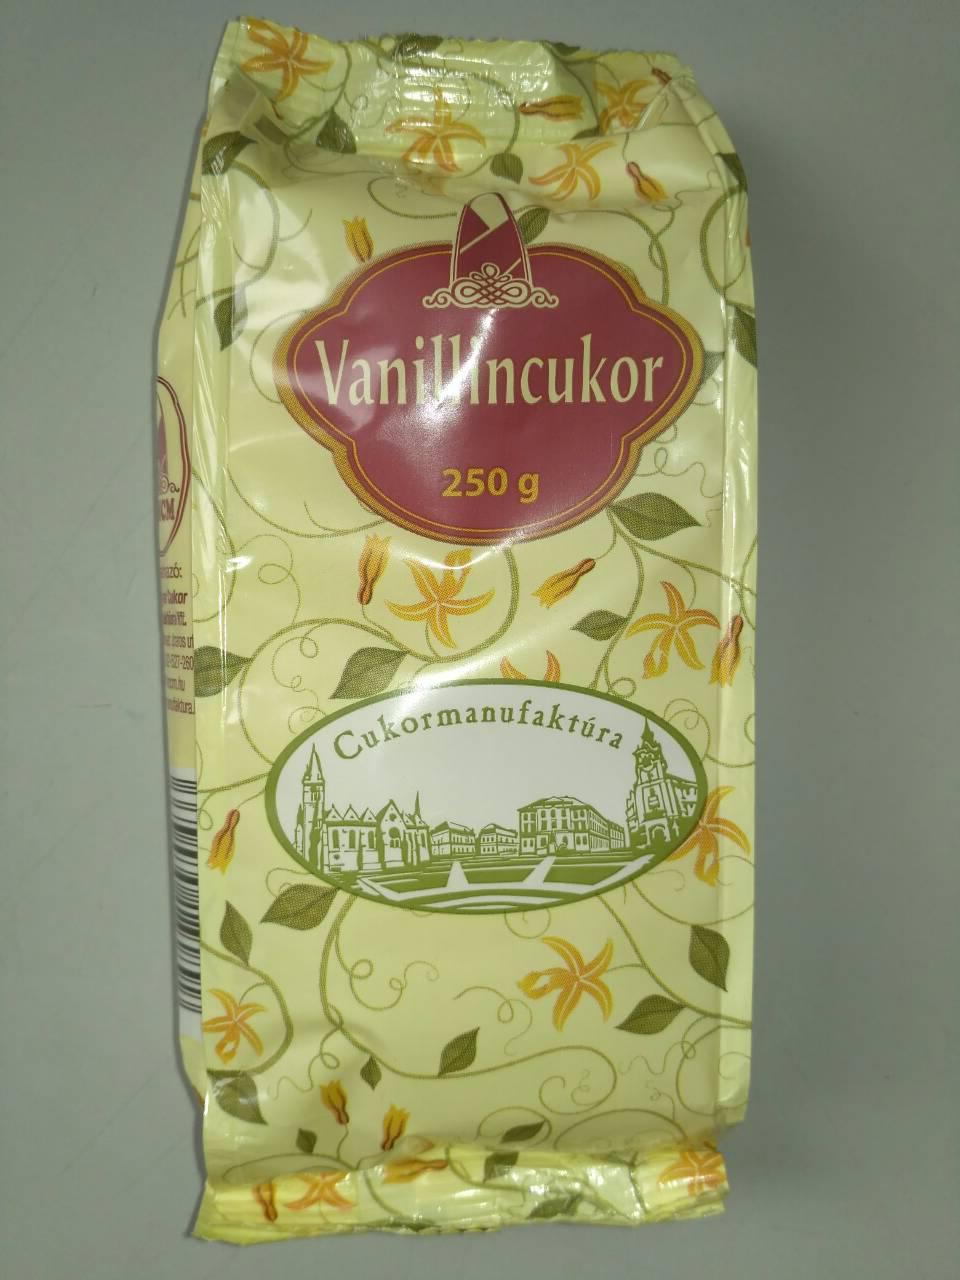 Ванільний цукор (Vanillin cukor) — 250 г. Угорщина